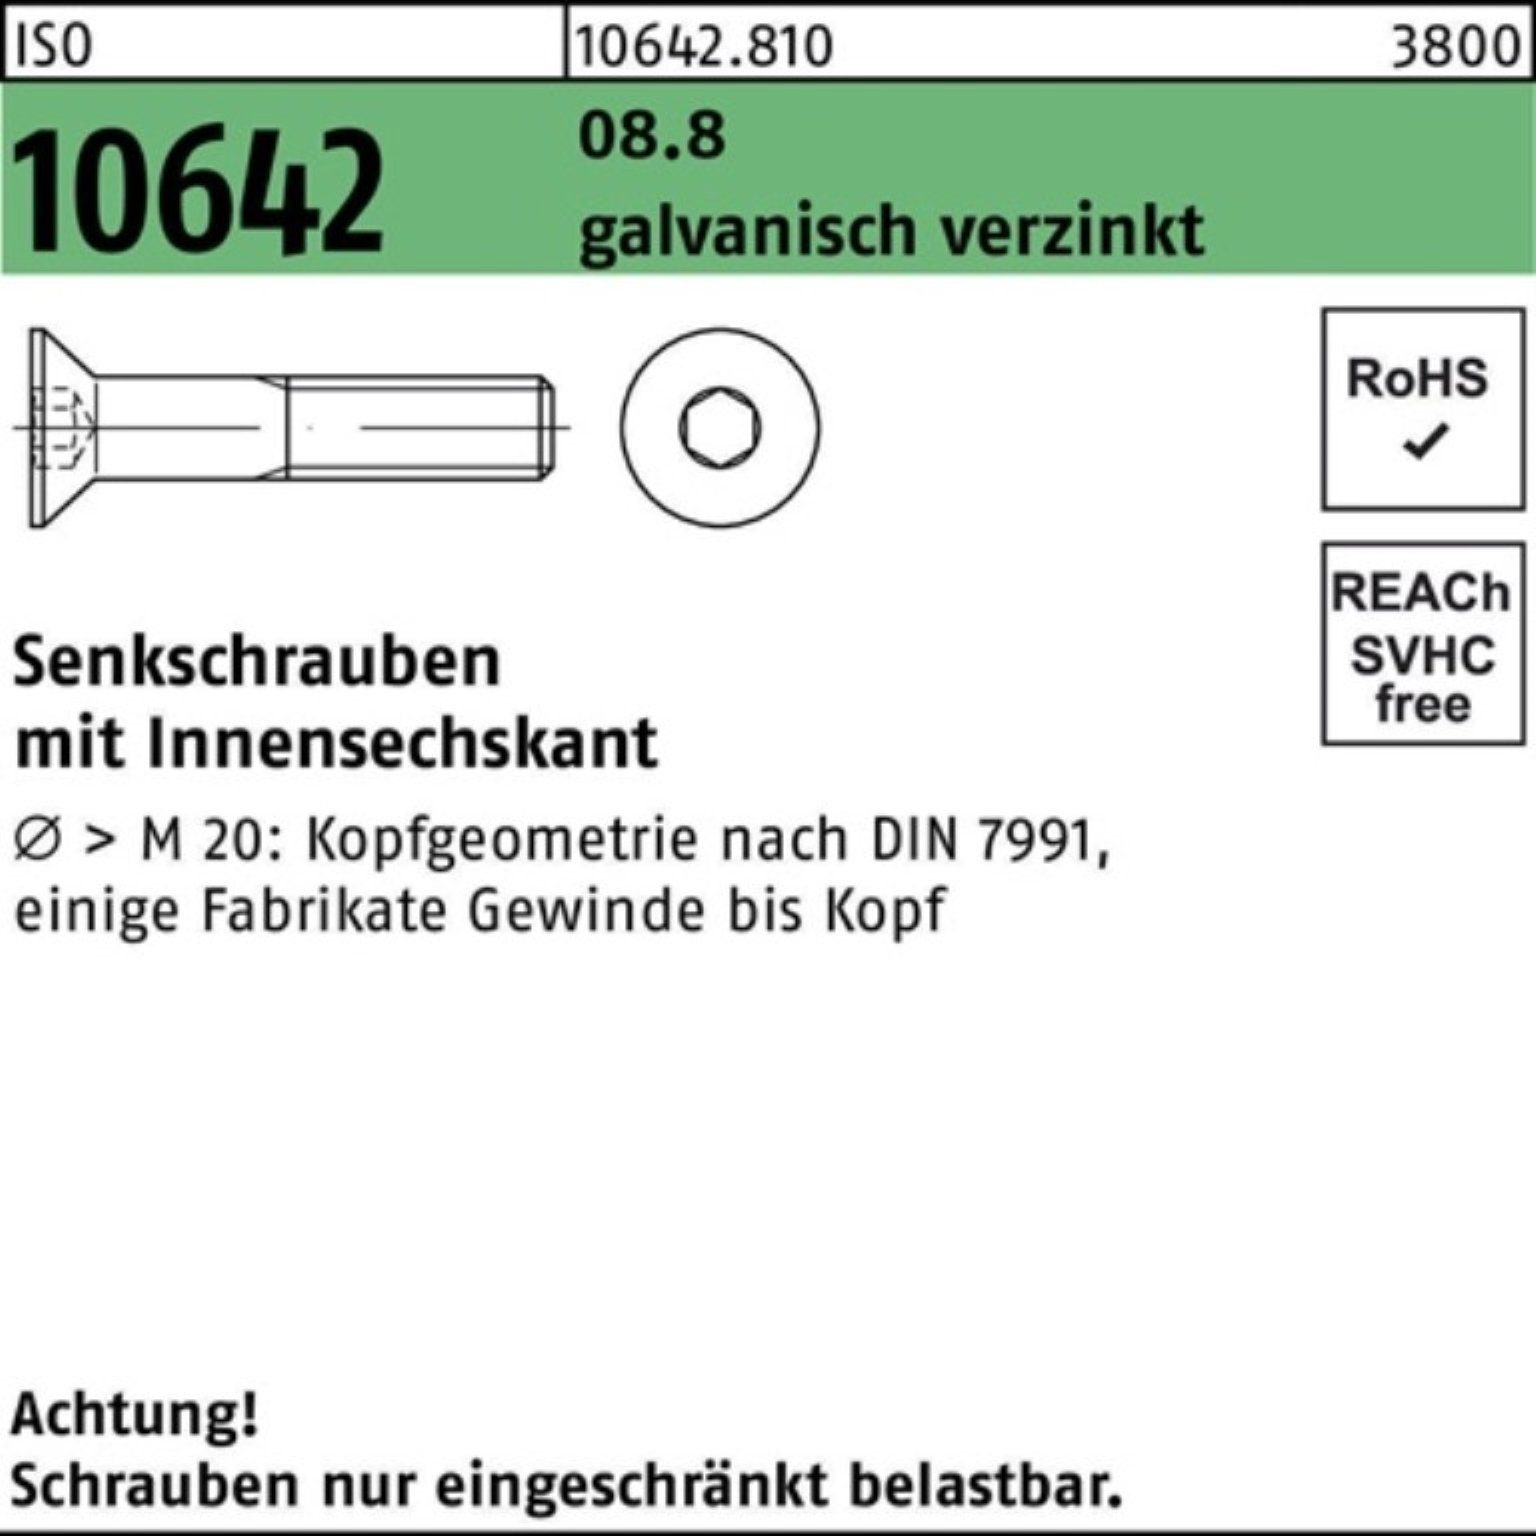 Reyher Senkschraube 500er Pack Senkschraube 10642 8.8 galv.verz. 500 25 M6x ISO Innen-6kt